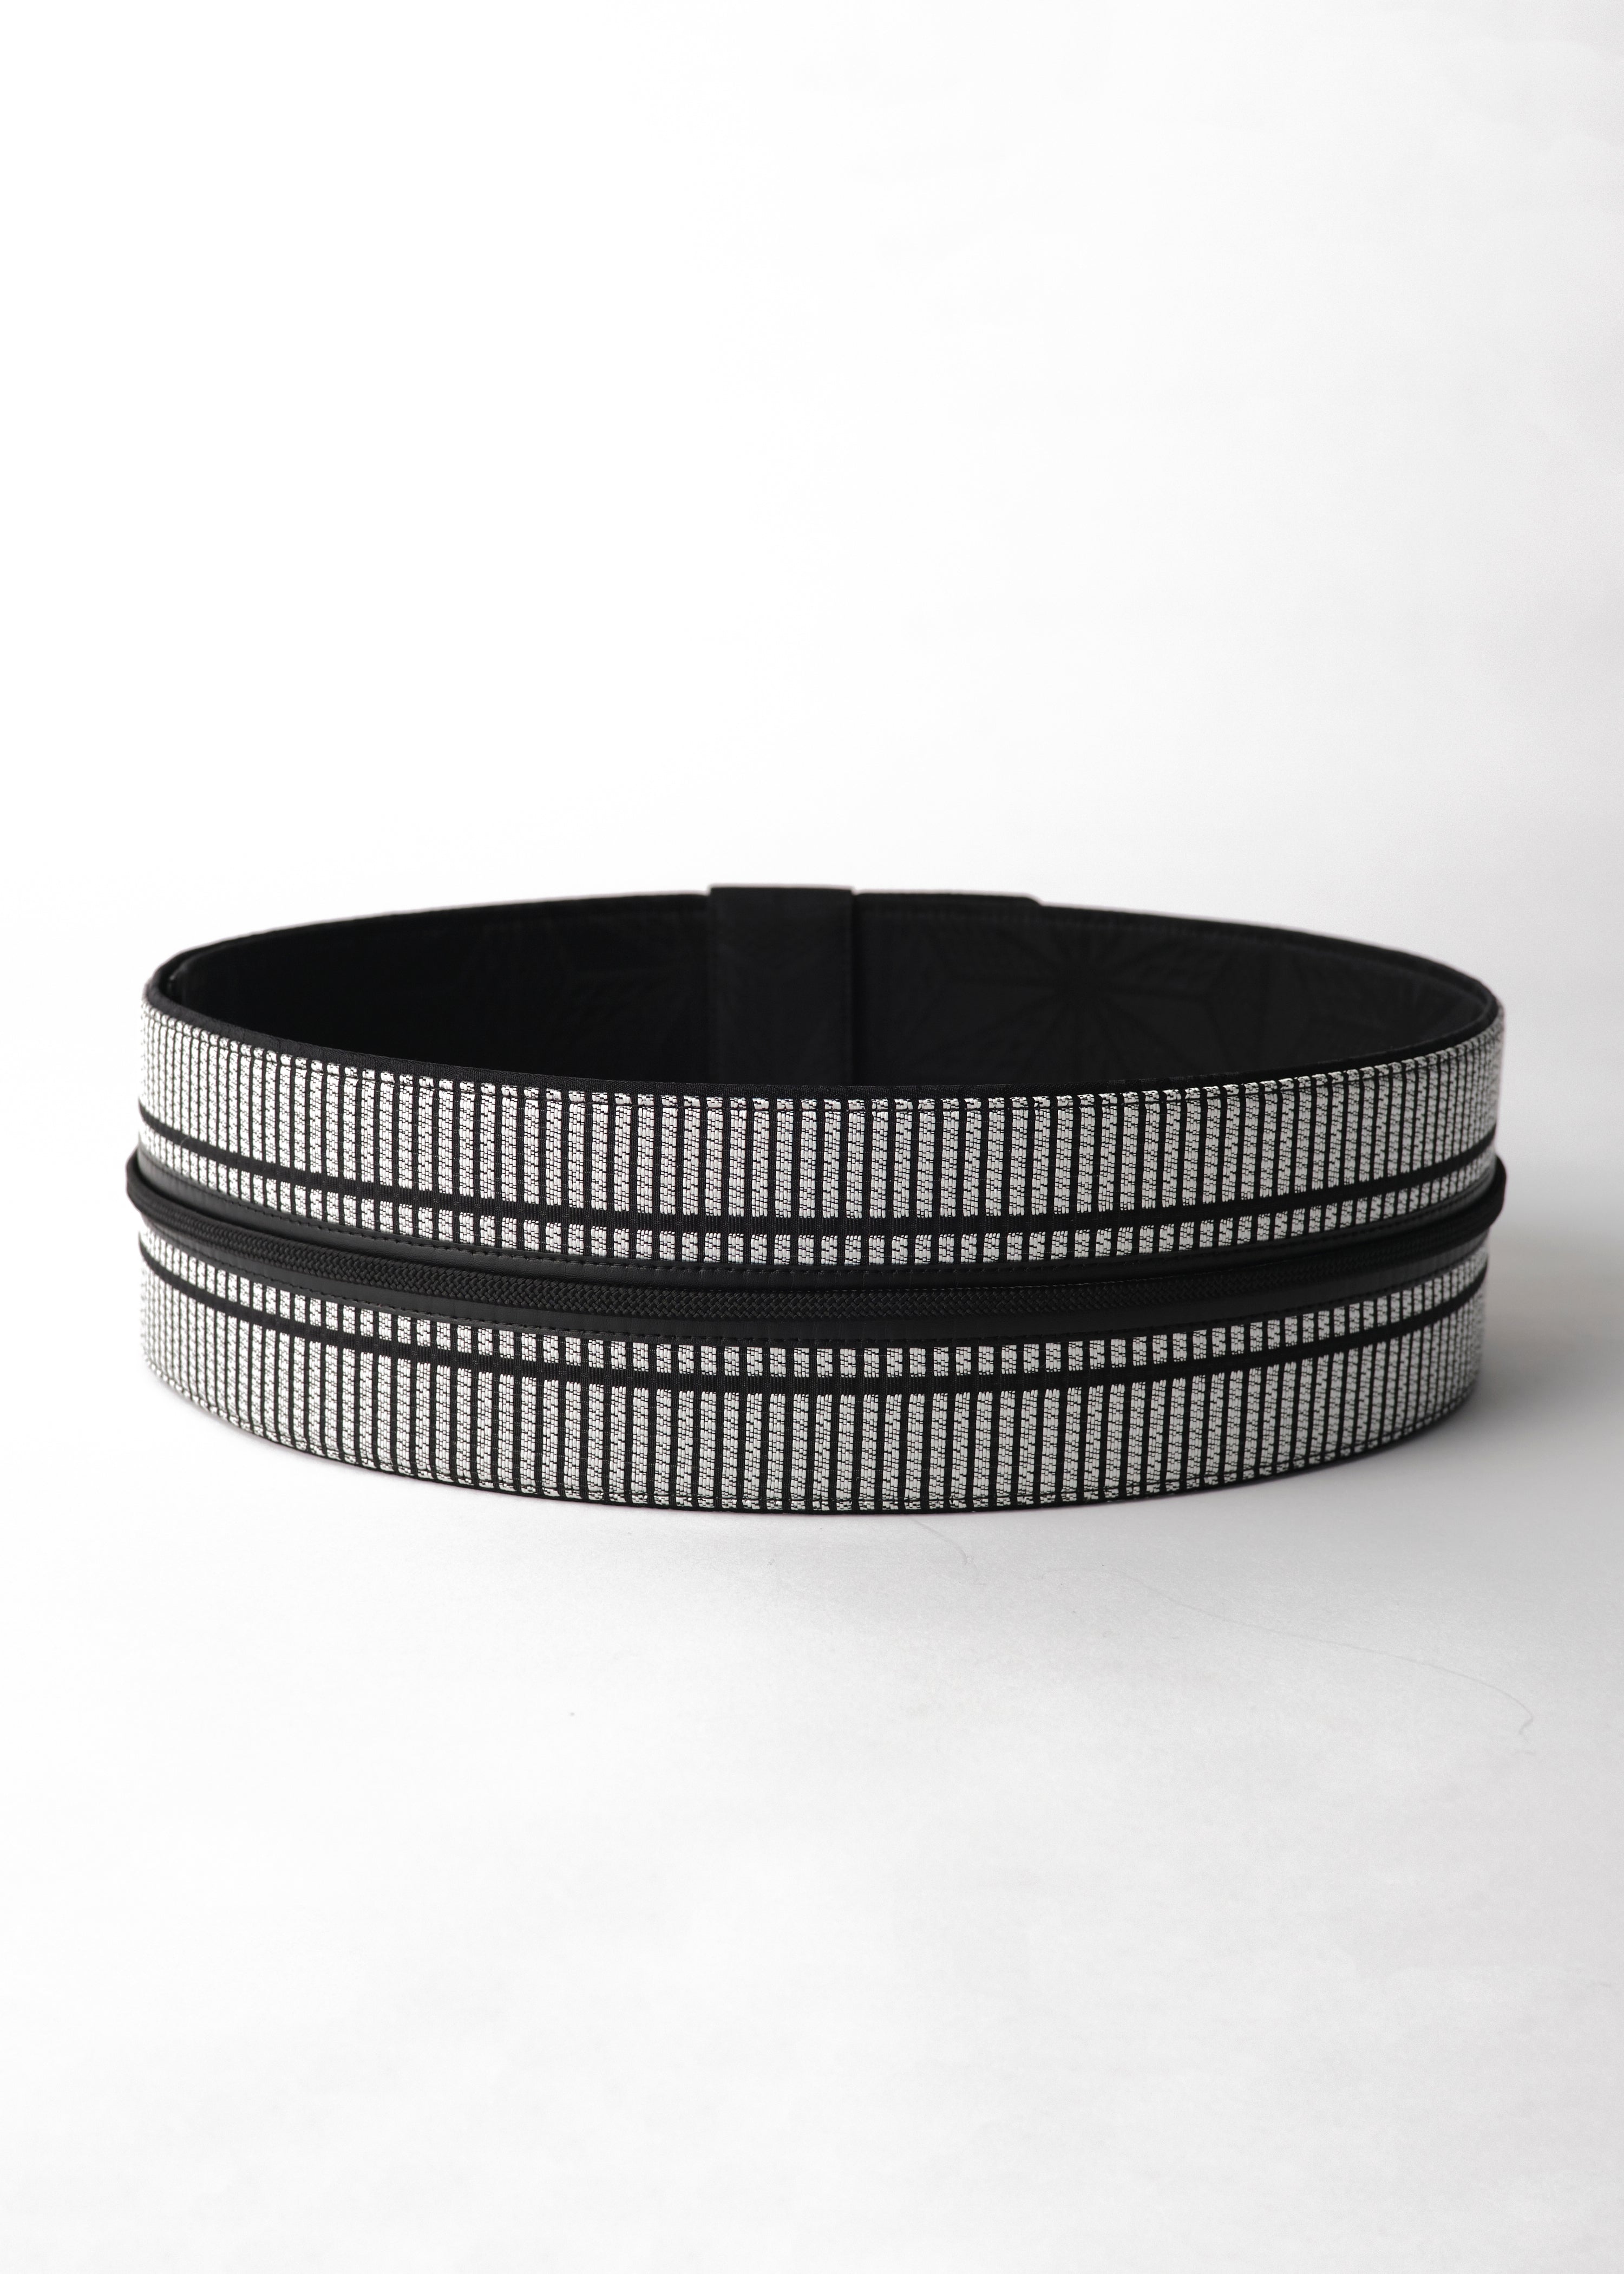 Silver tatami lattice: Men's obi belt | Obi type